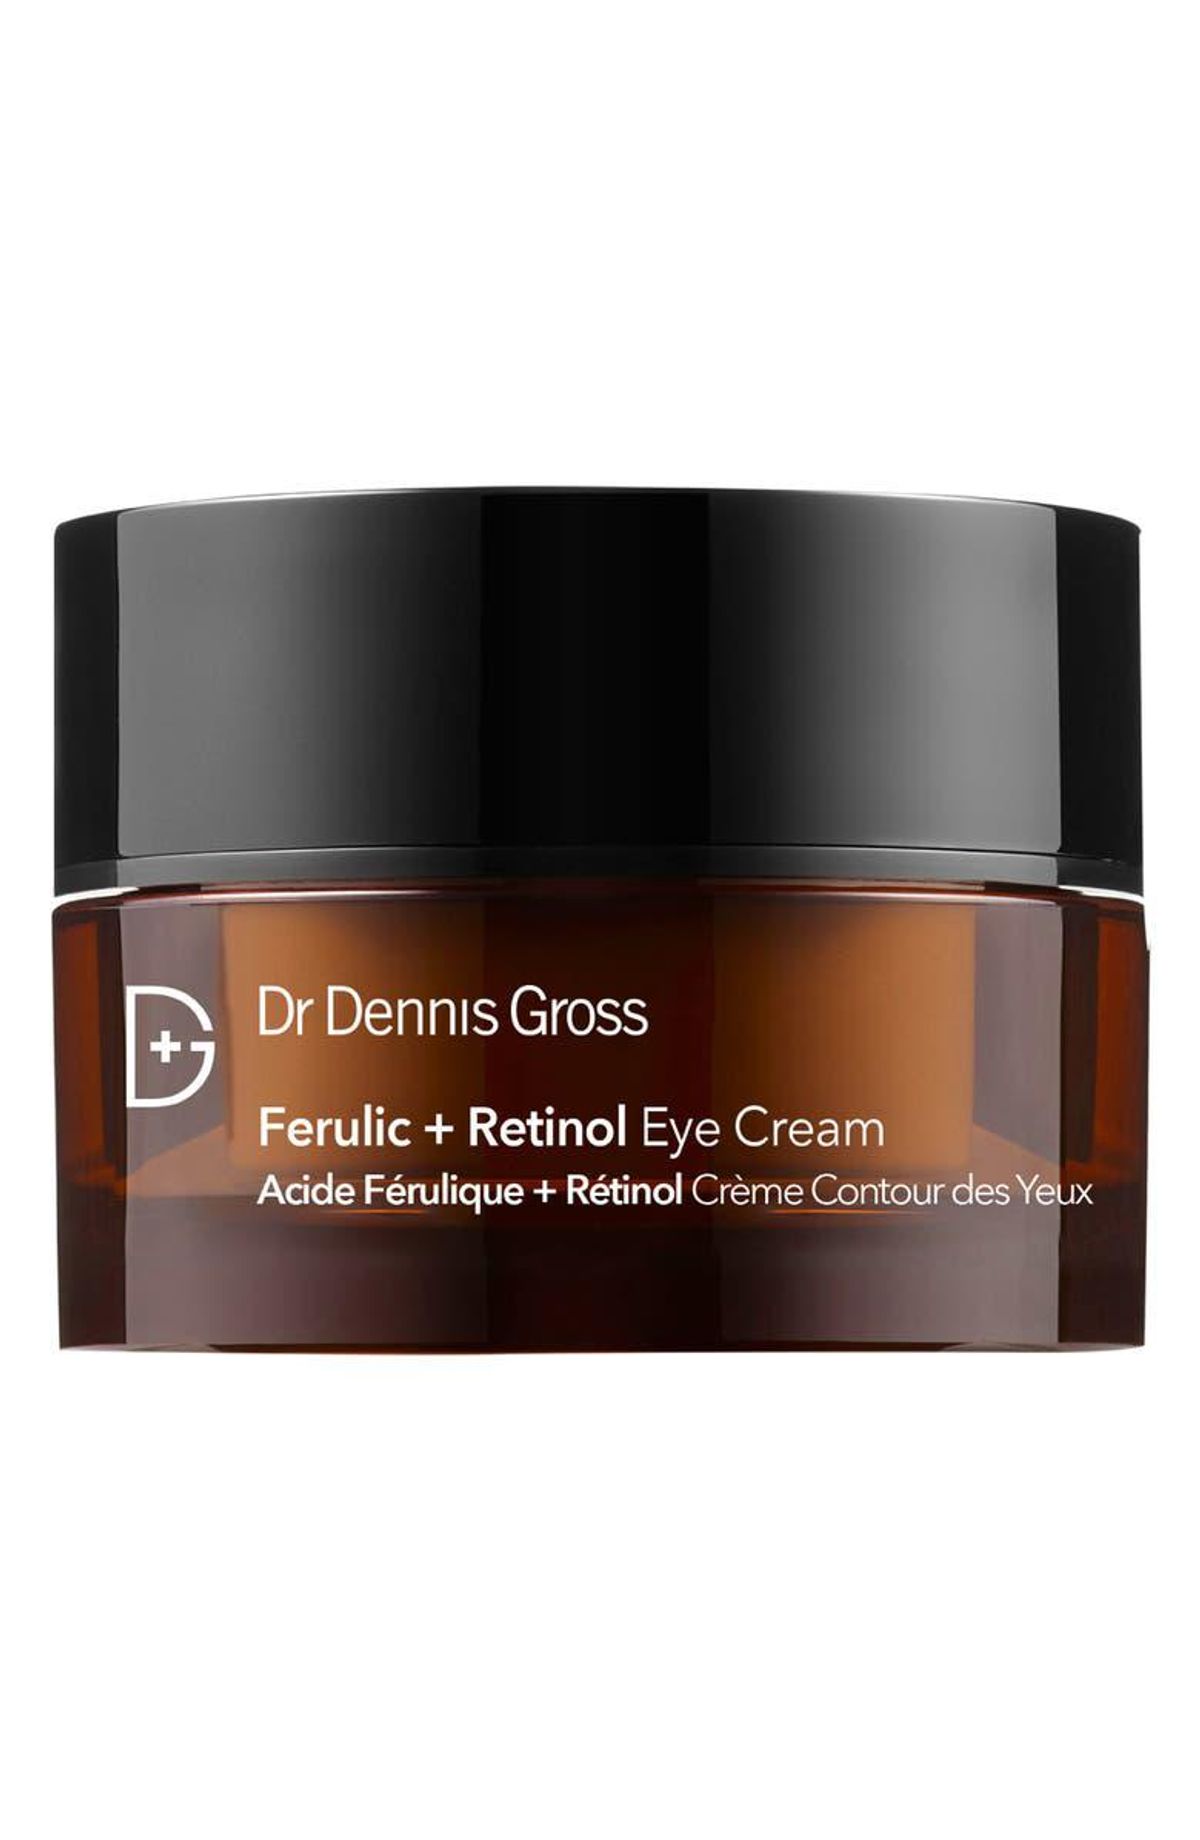 dr dennis gross skincare ferulic and retinol eye cream